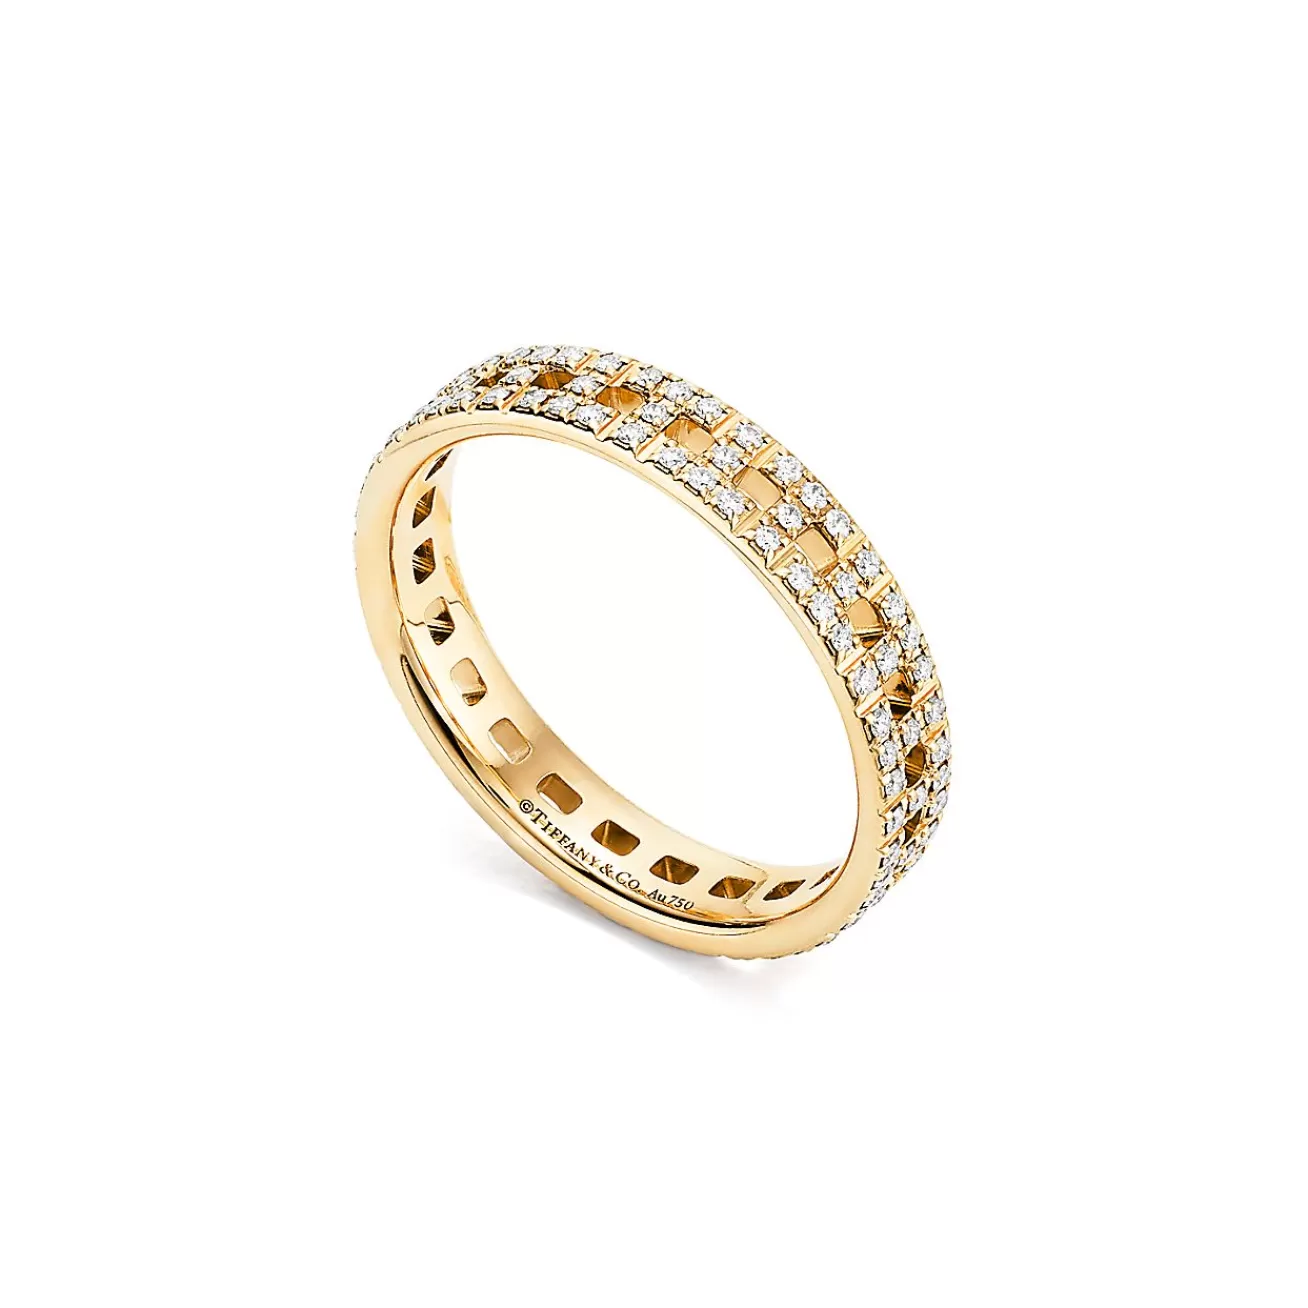 Tiffany & Co. Tiffany T True narrow ring in 18k gold with pavé diamonds, 3.5 mm wide. | ^Women Rings | Men's Jewelry